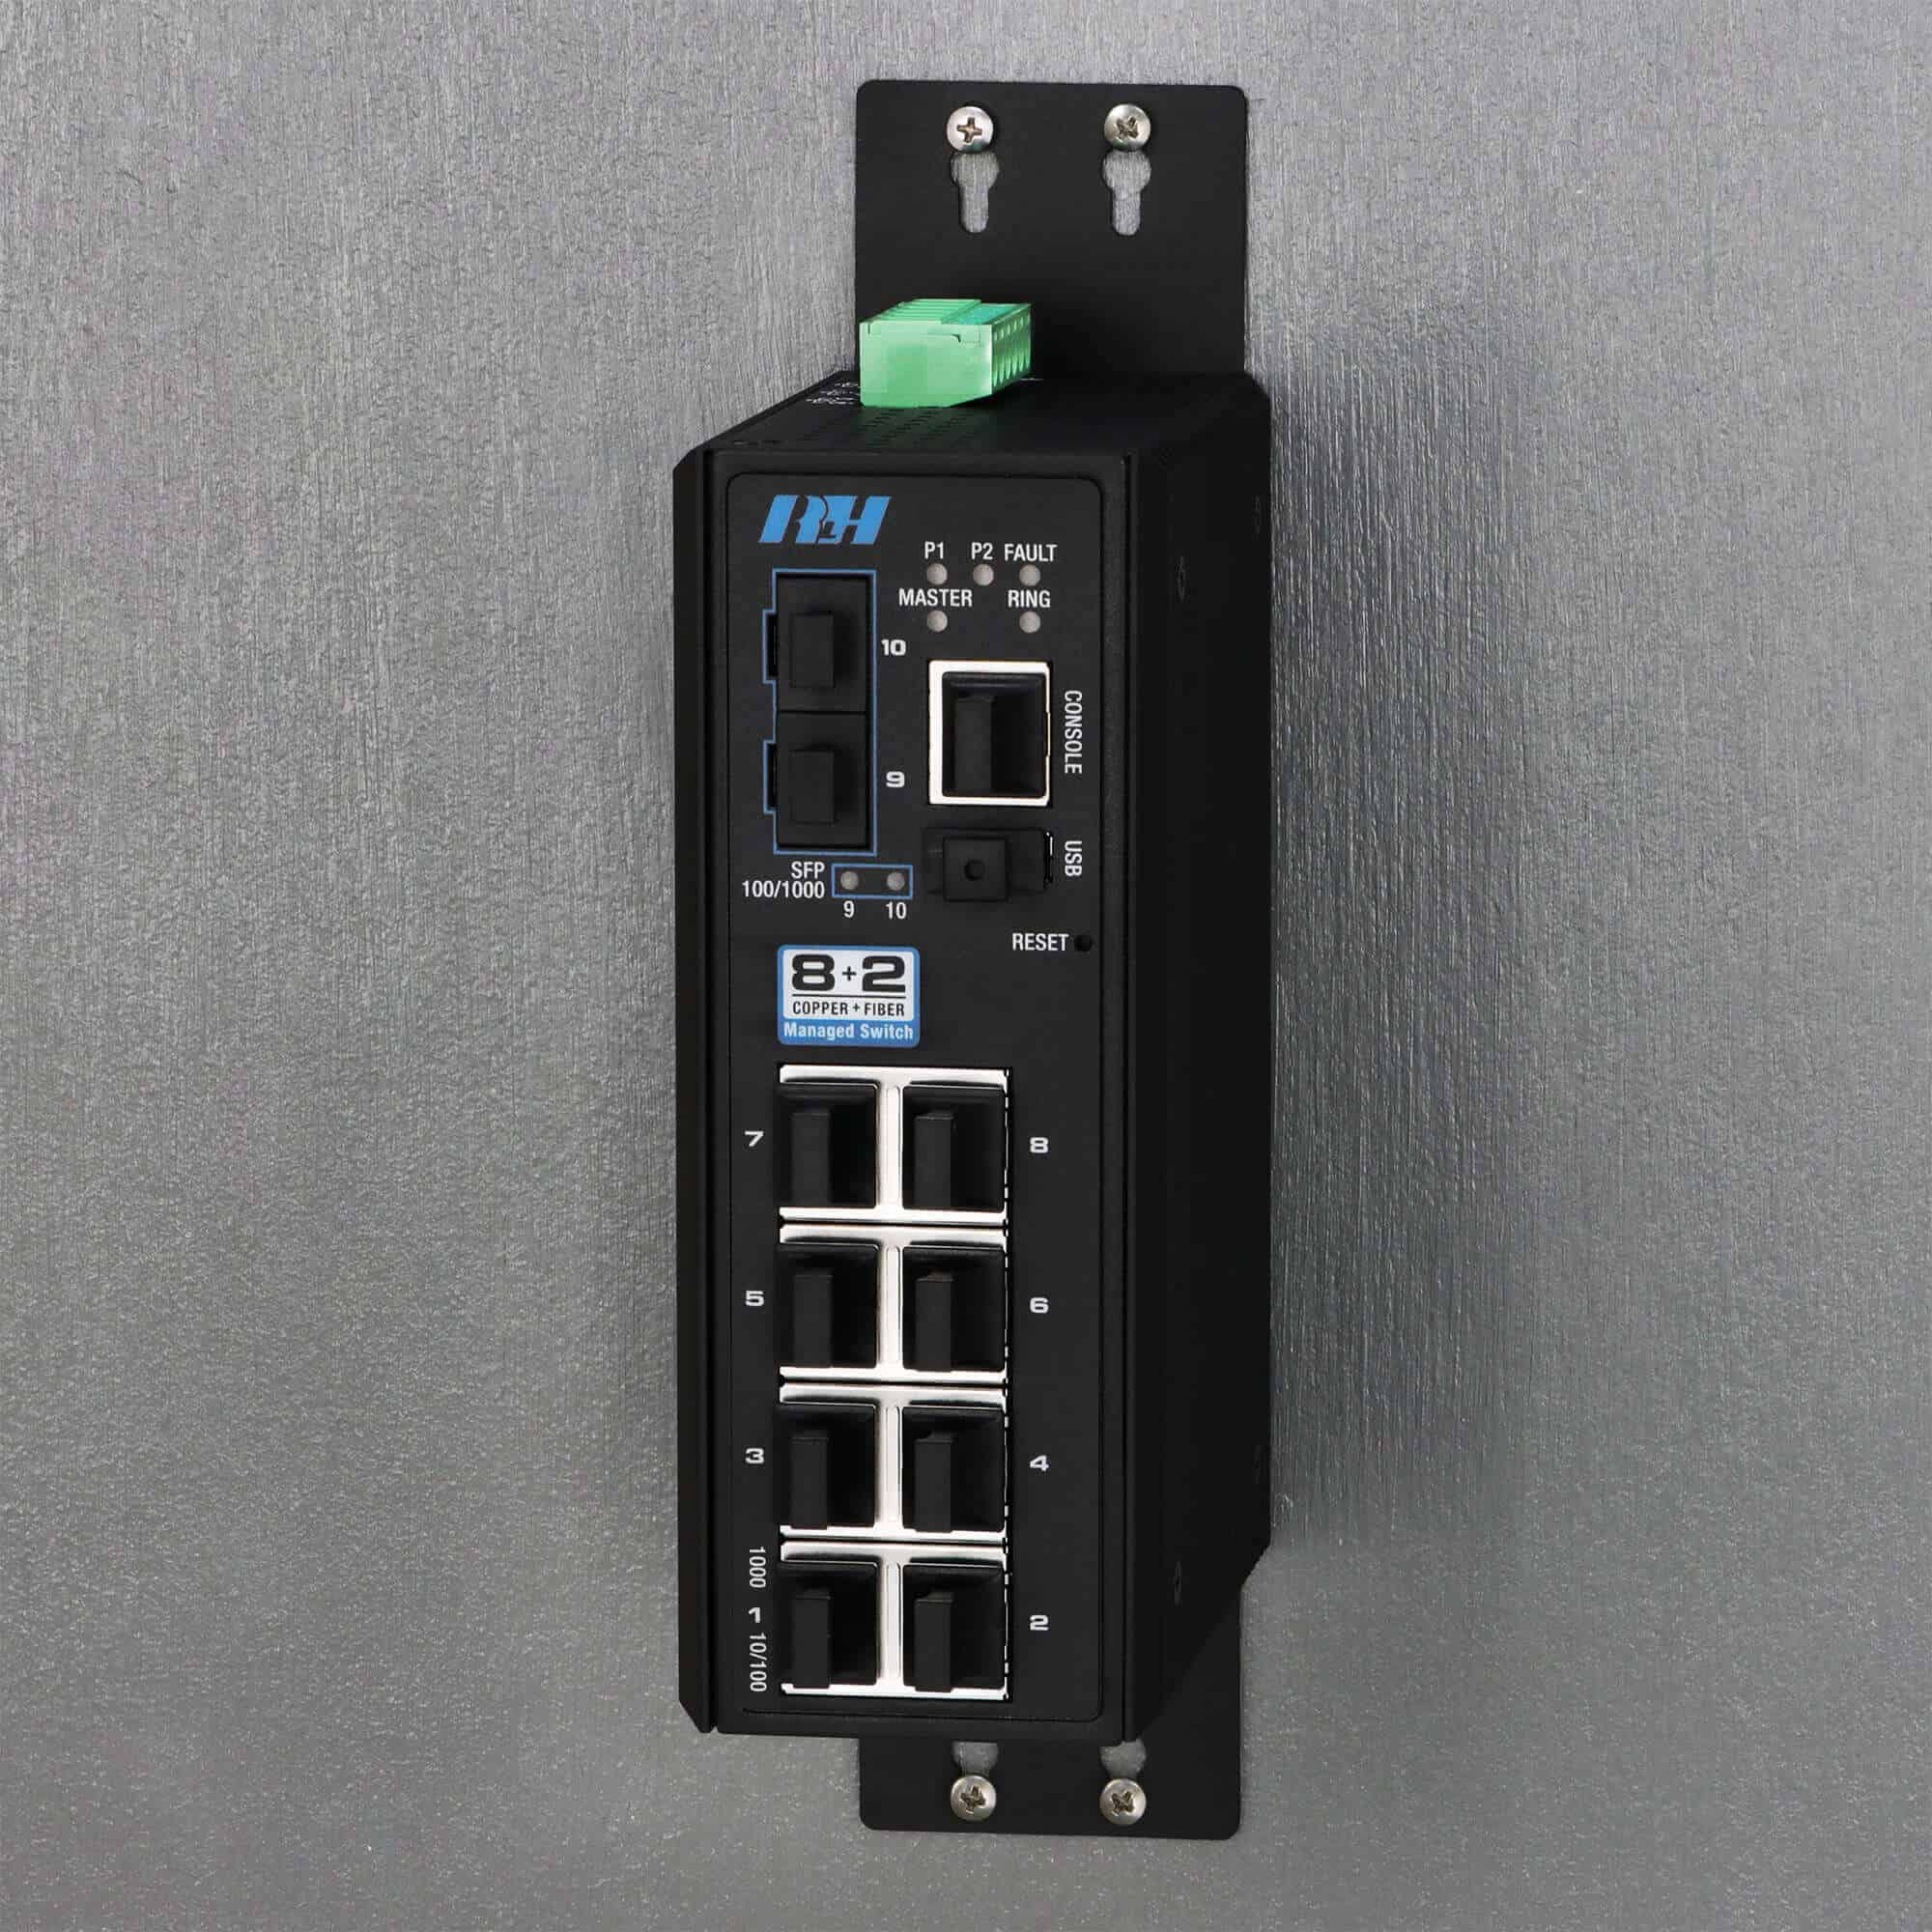 Switch Niv2 8 port RJ45 Ggabit + 16 ports fibre optique SFP C890216 